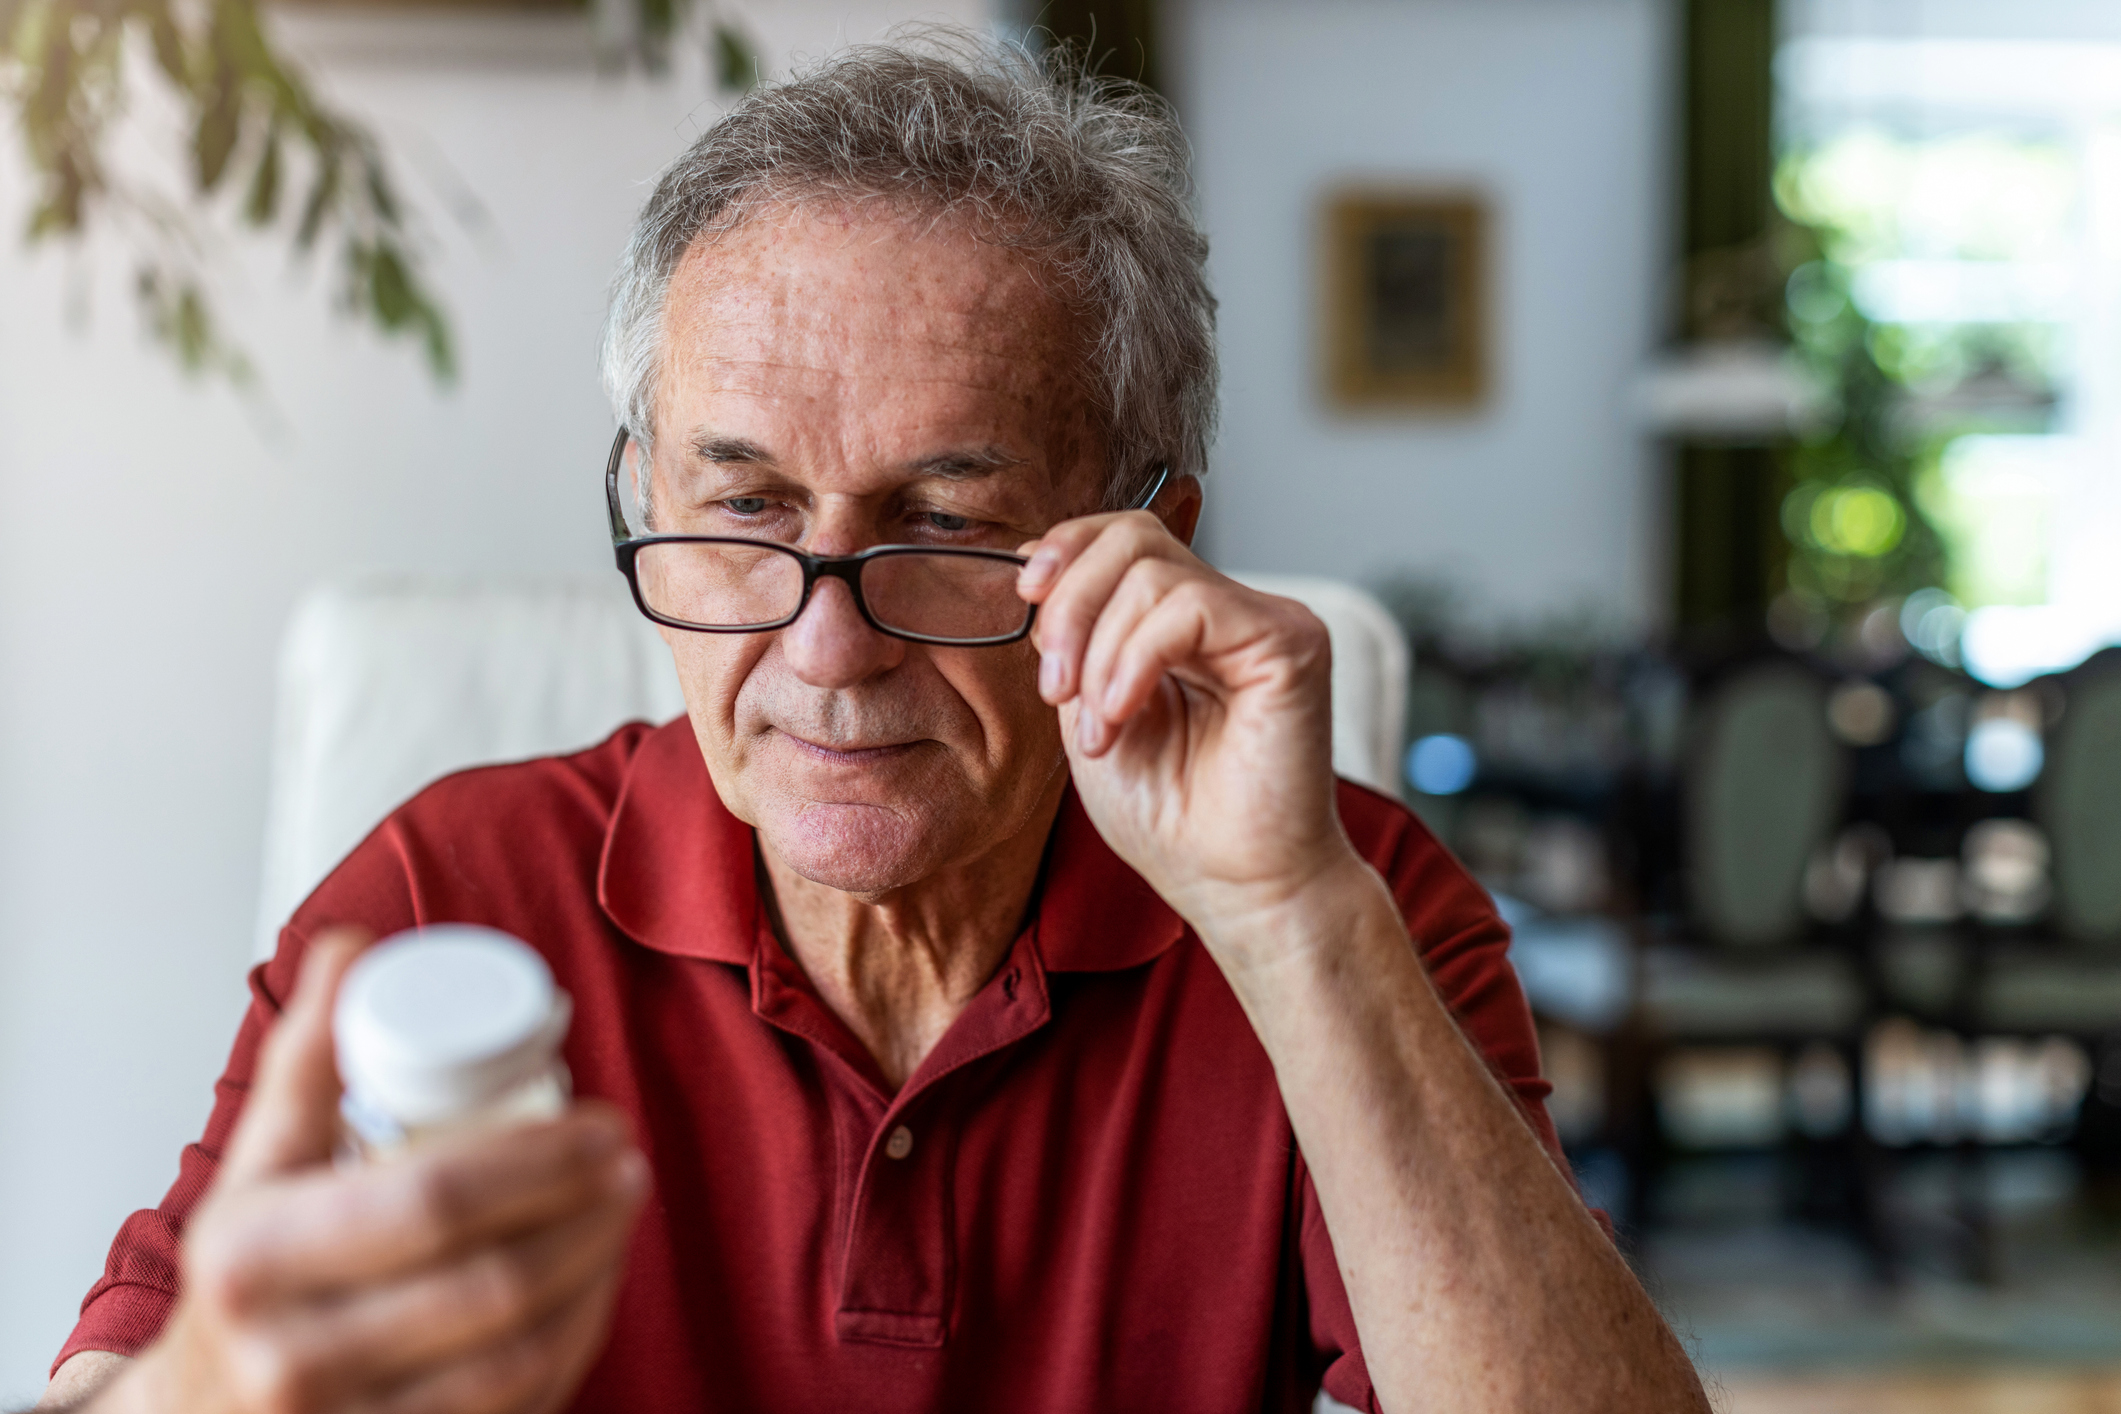 elderly man trying to understand his prescription medication vile. medication mismanagement concept image 